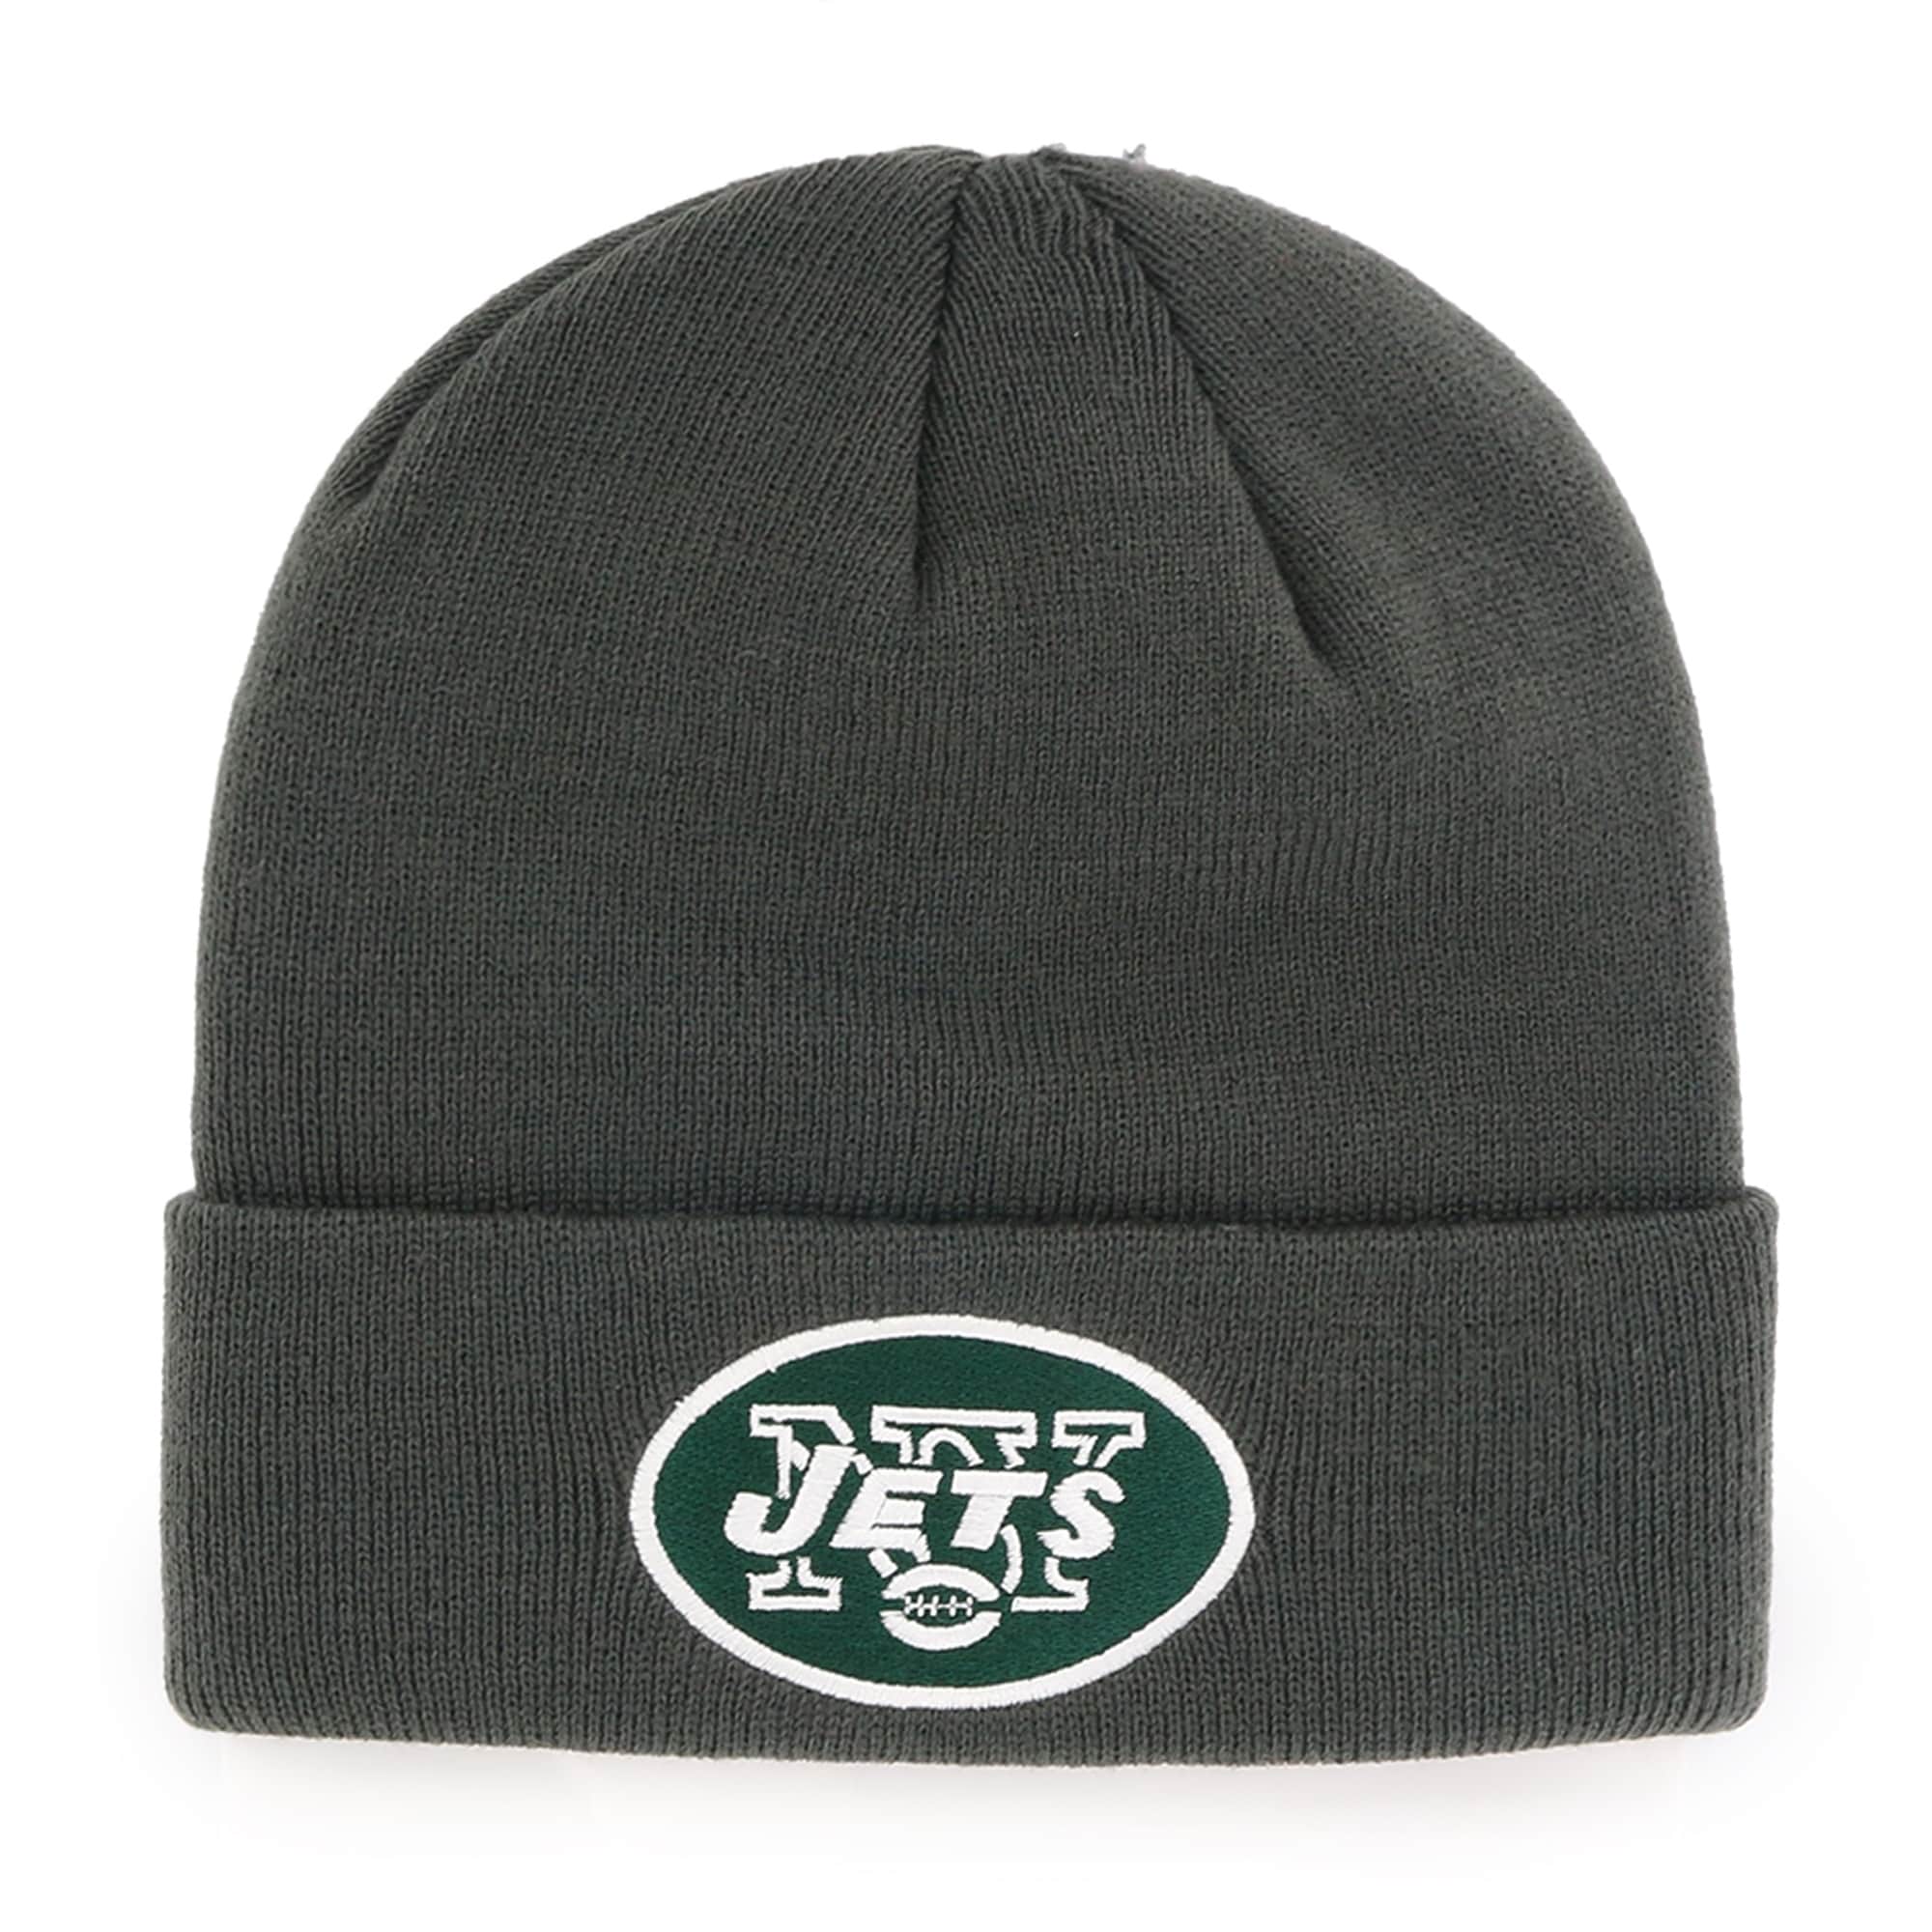 new york jets knit hat